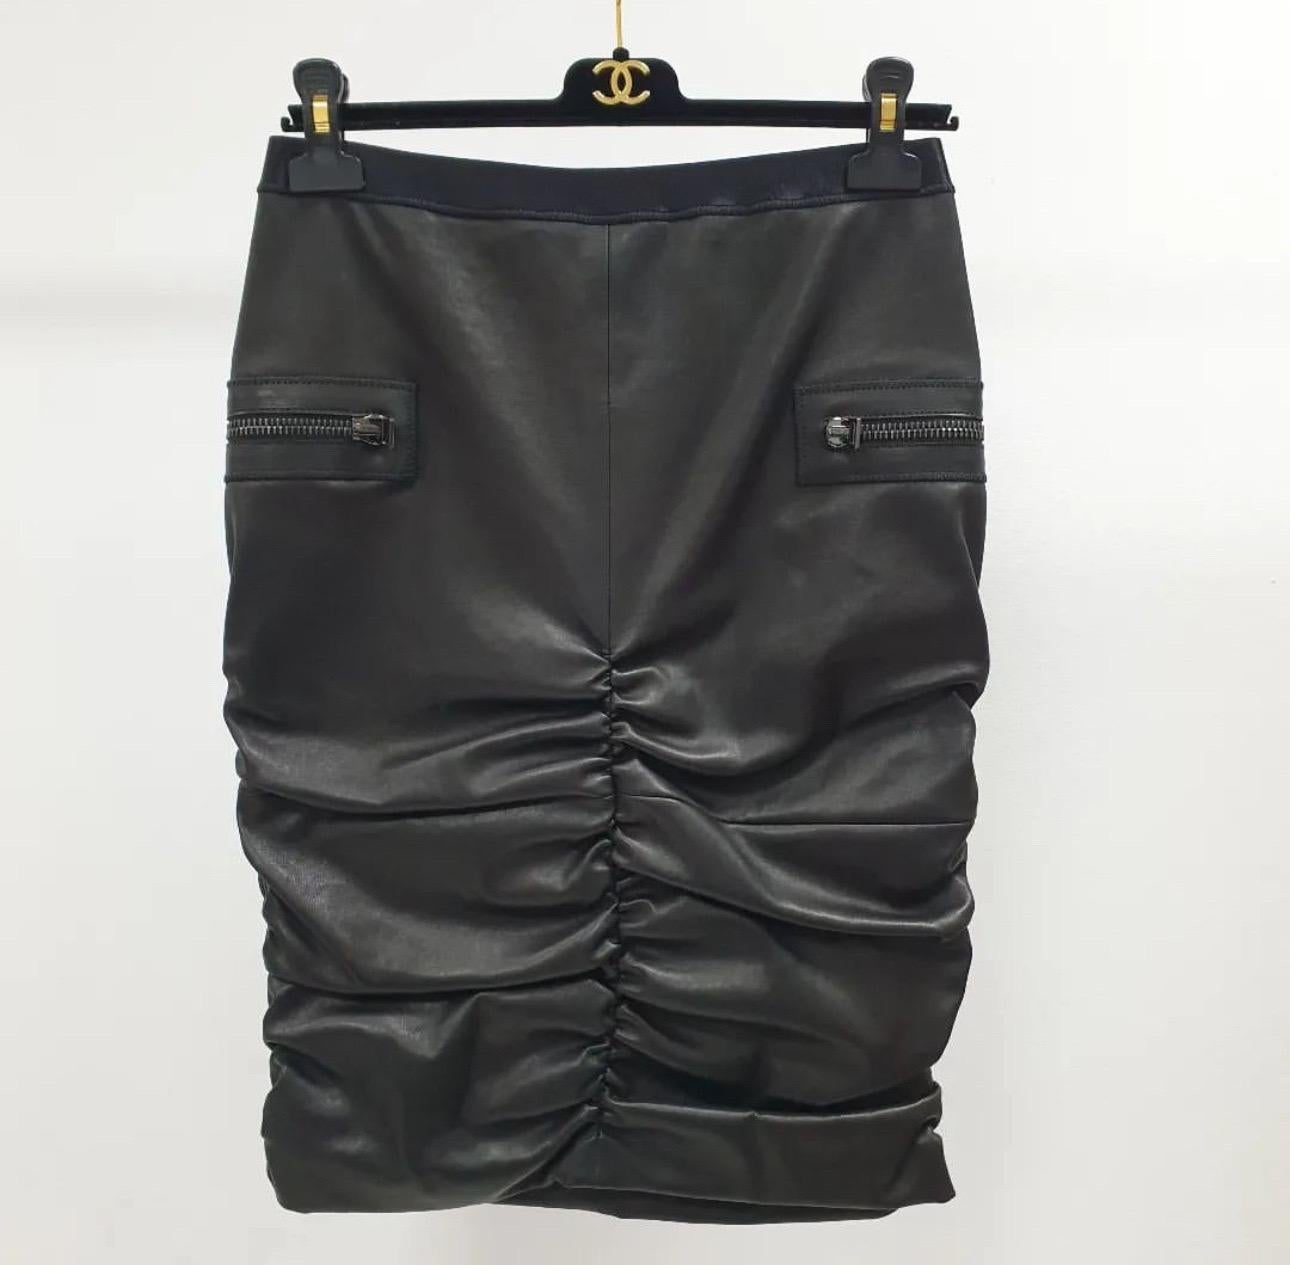 Tom Ford Black Leather Jacket Skirt Suit For Sale 2